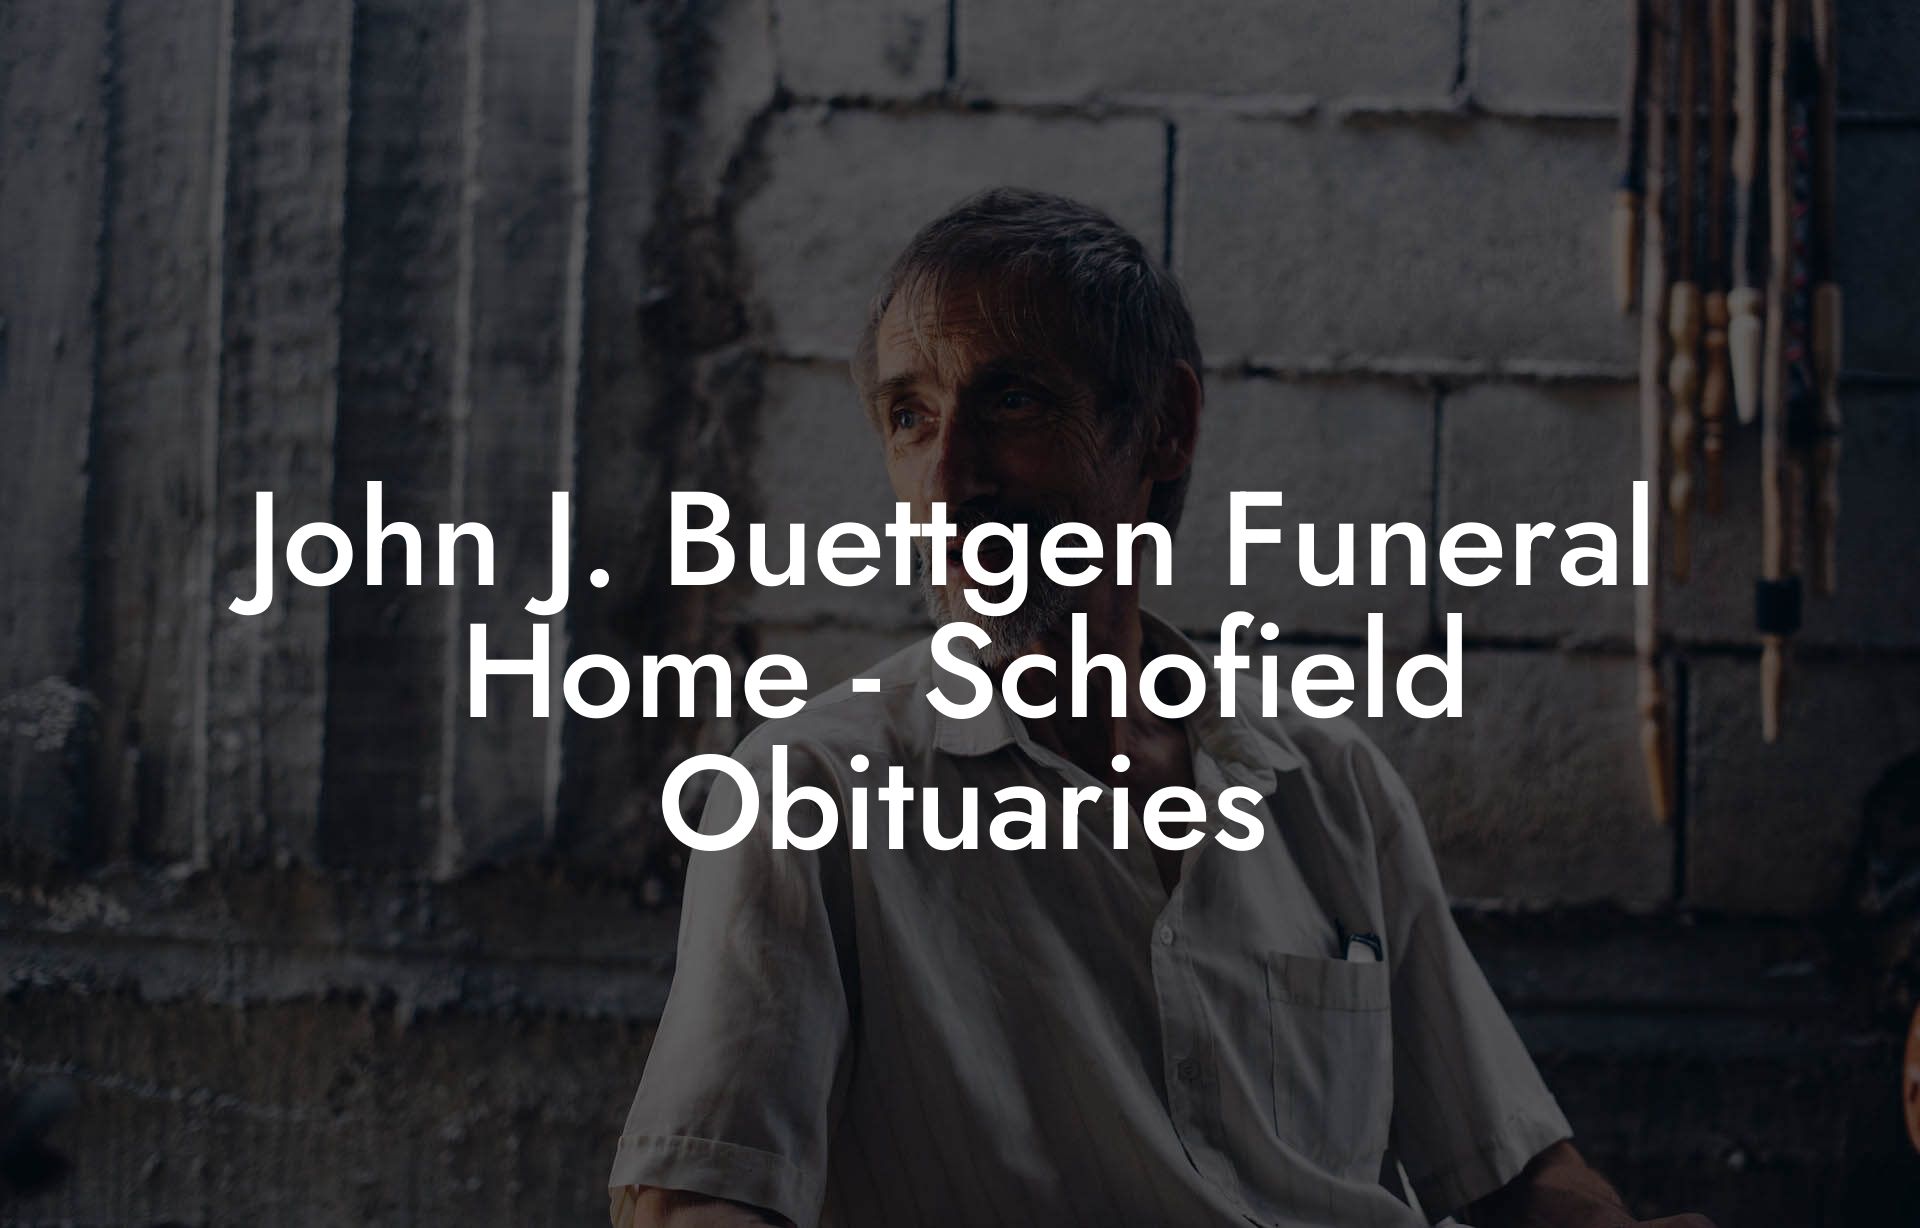 John J. Buettgen Funeral Home - Schofield Obituaries